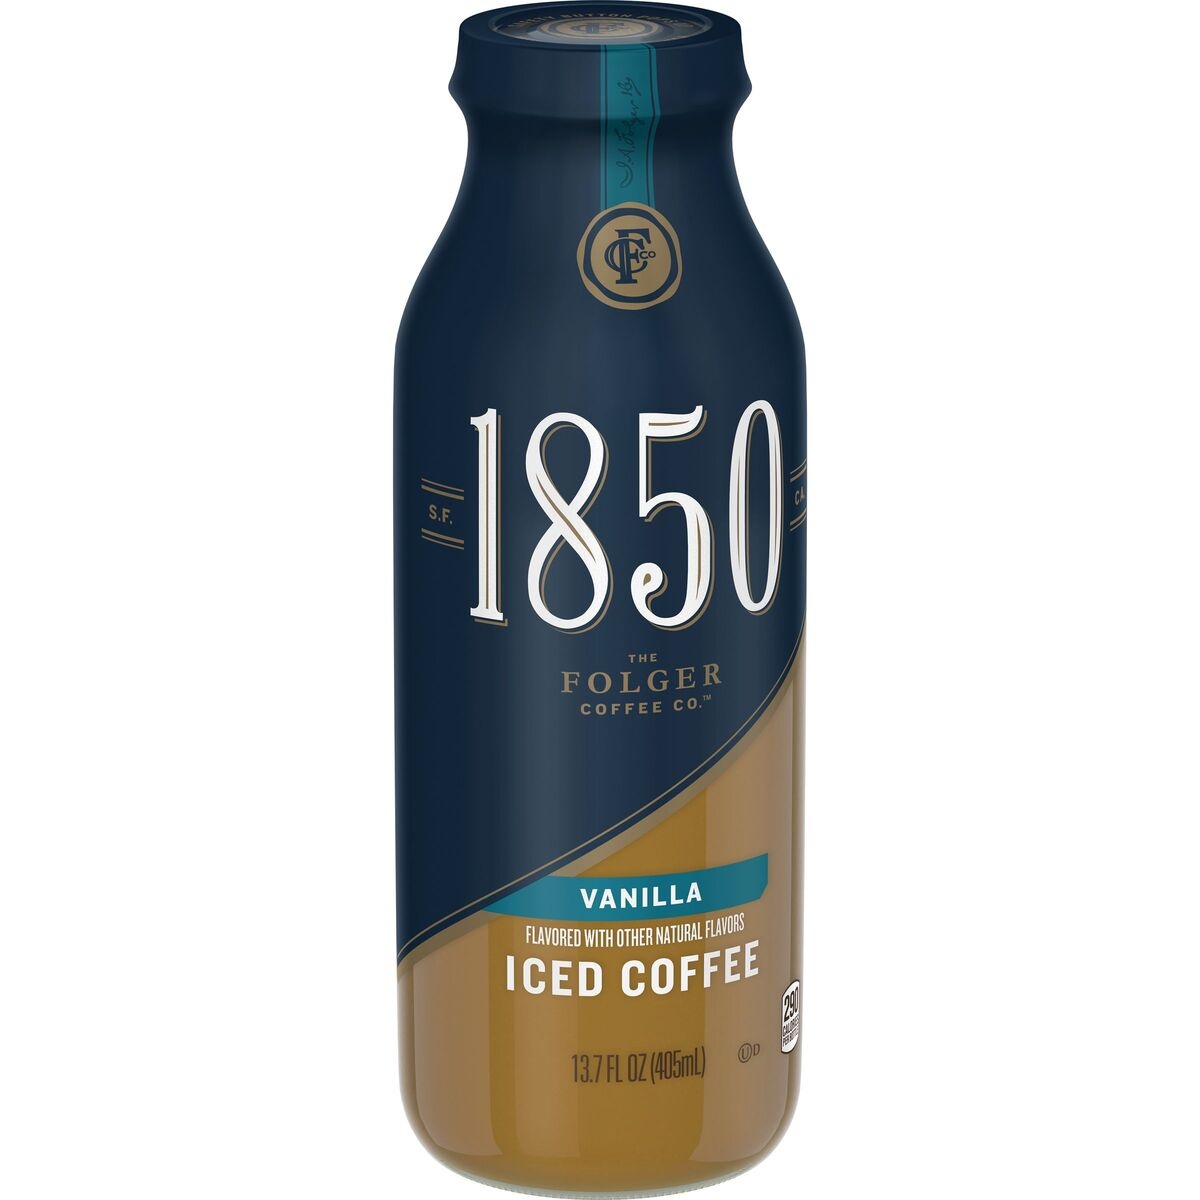 slide 2 of 9, Folgers 1850 Vanilla Iced Coffee, 13.7 fl oz